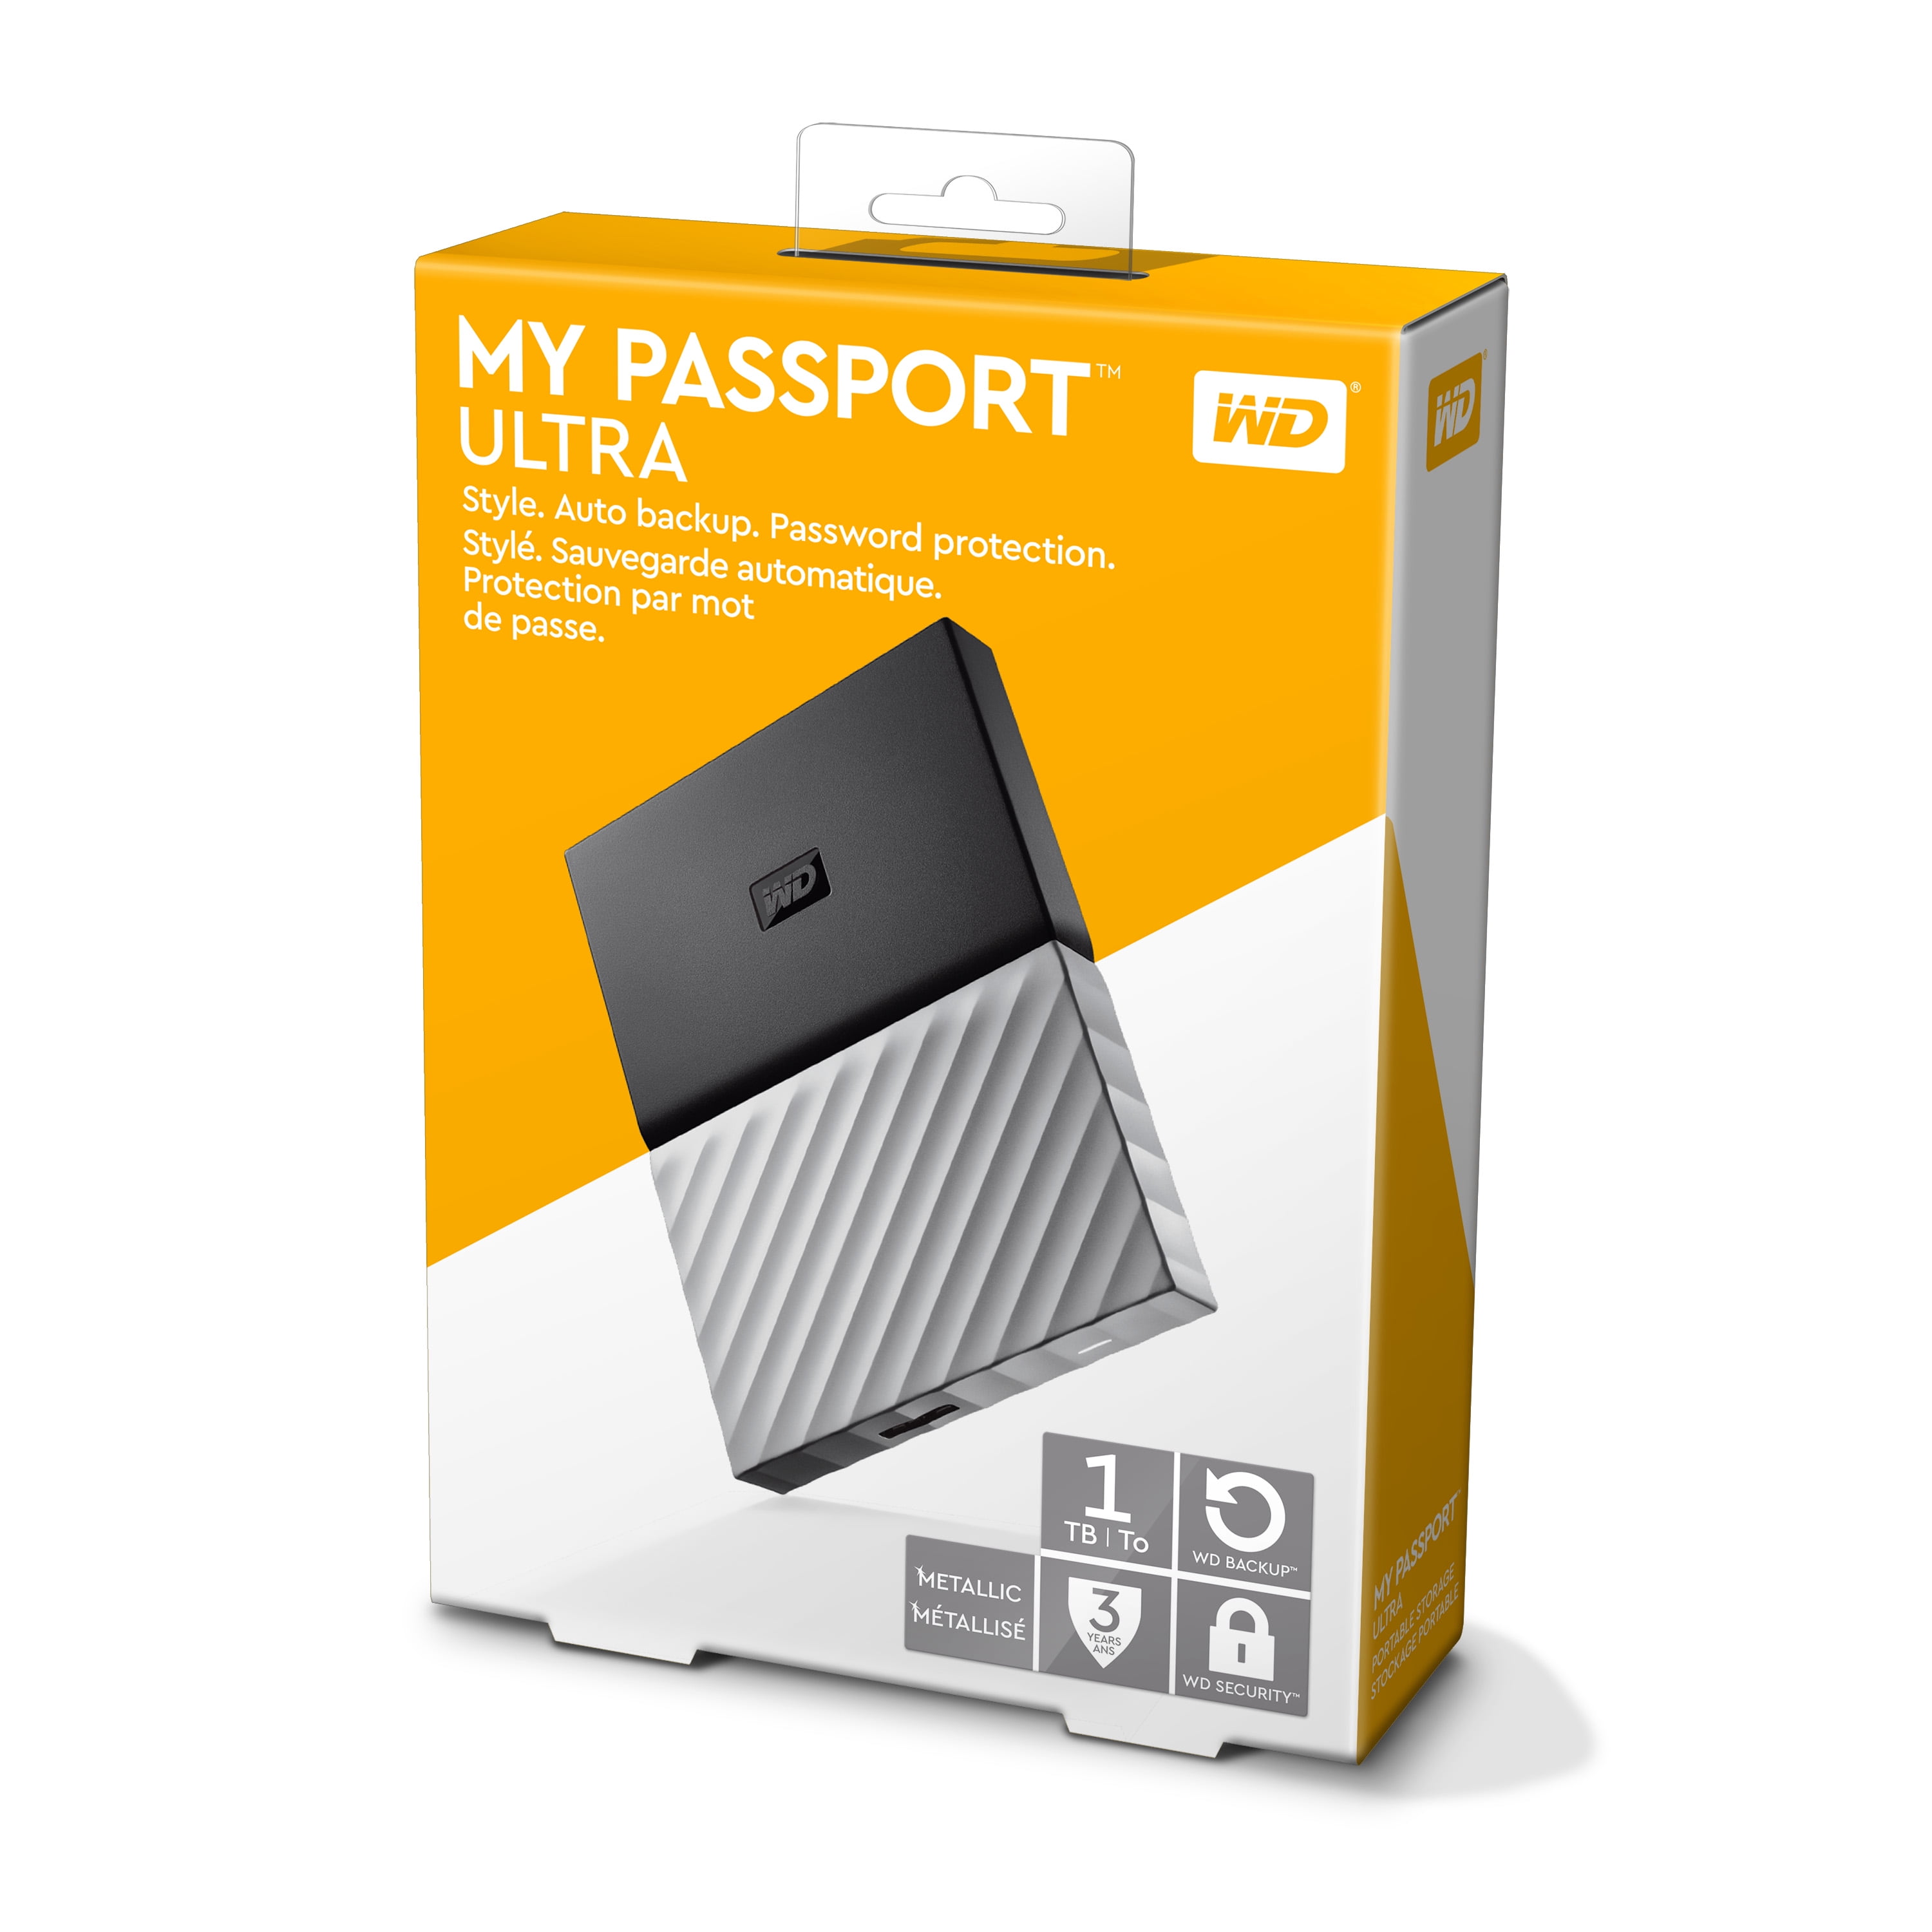 NEW WD My Passport Ultra 1TB Gray External HDD Hard Drive USB3.0 WDBTLG0010BGY 